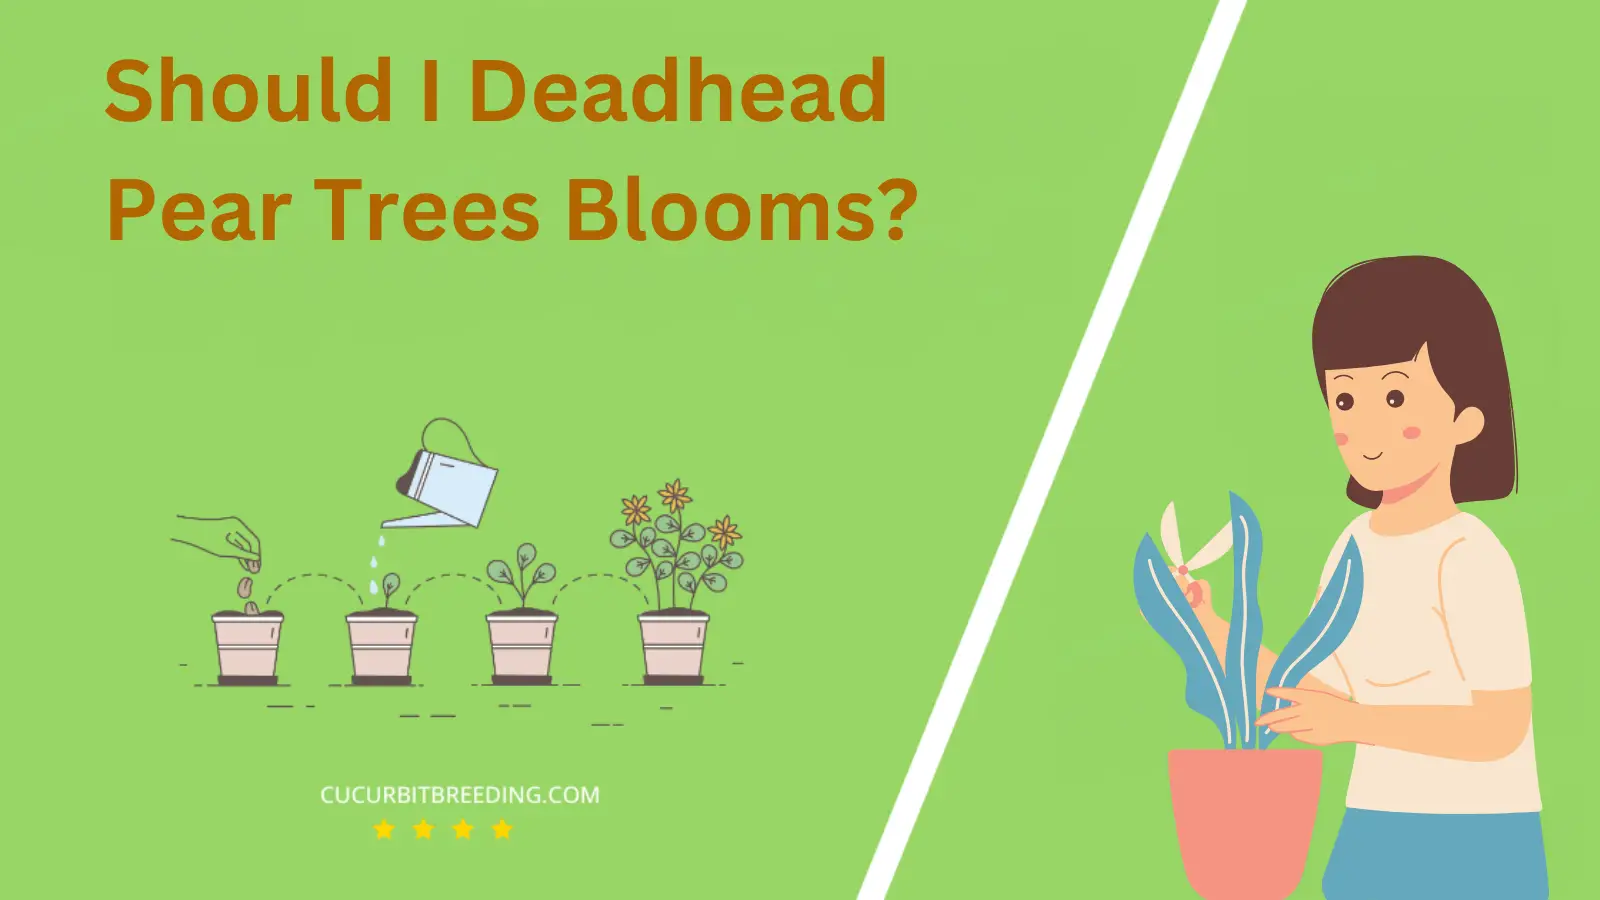 Should I Deadhead Pear Trees Blooms?